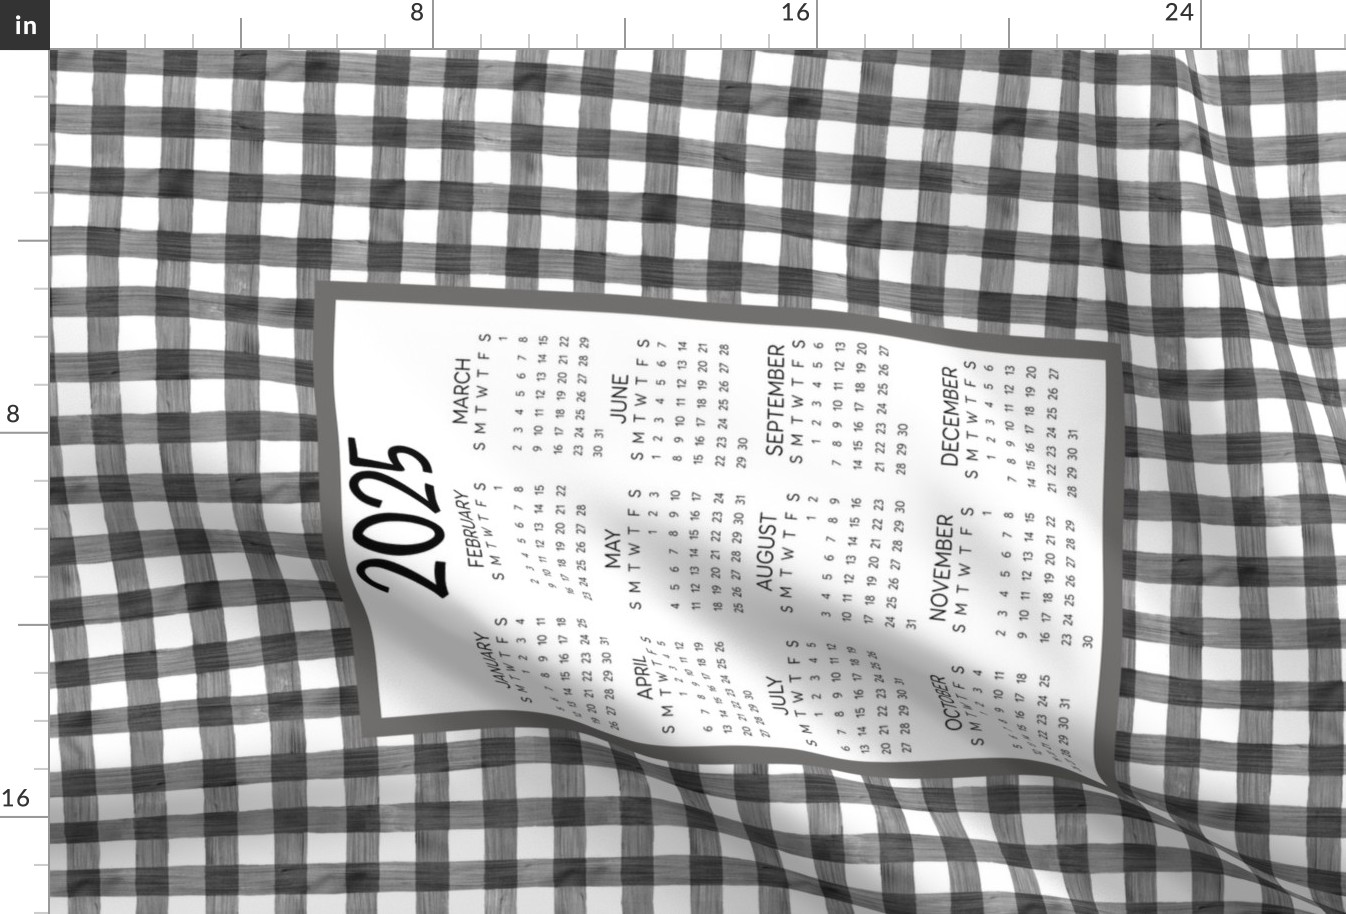 2025 Calendar Fat Quarter Wall Hanging Tea Towel Black Grey and White Watercolor Buffalo Checker